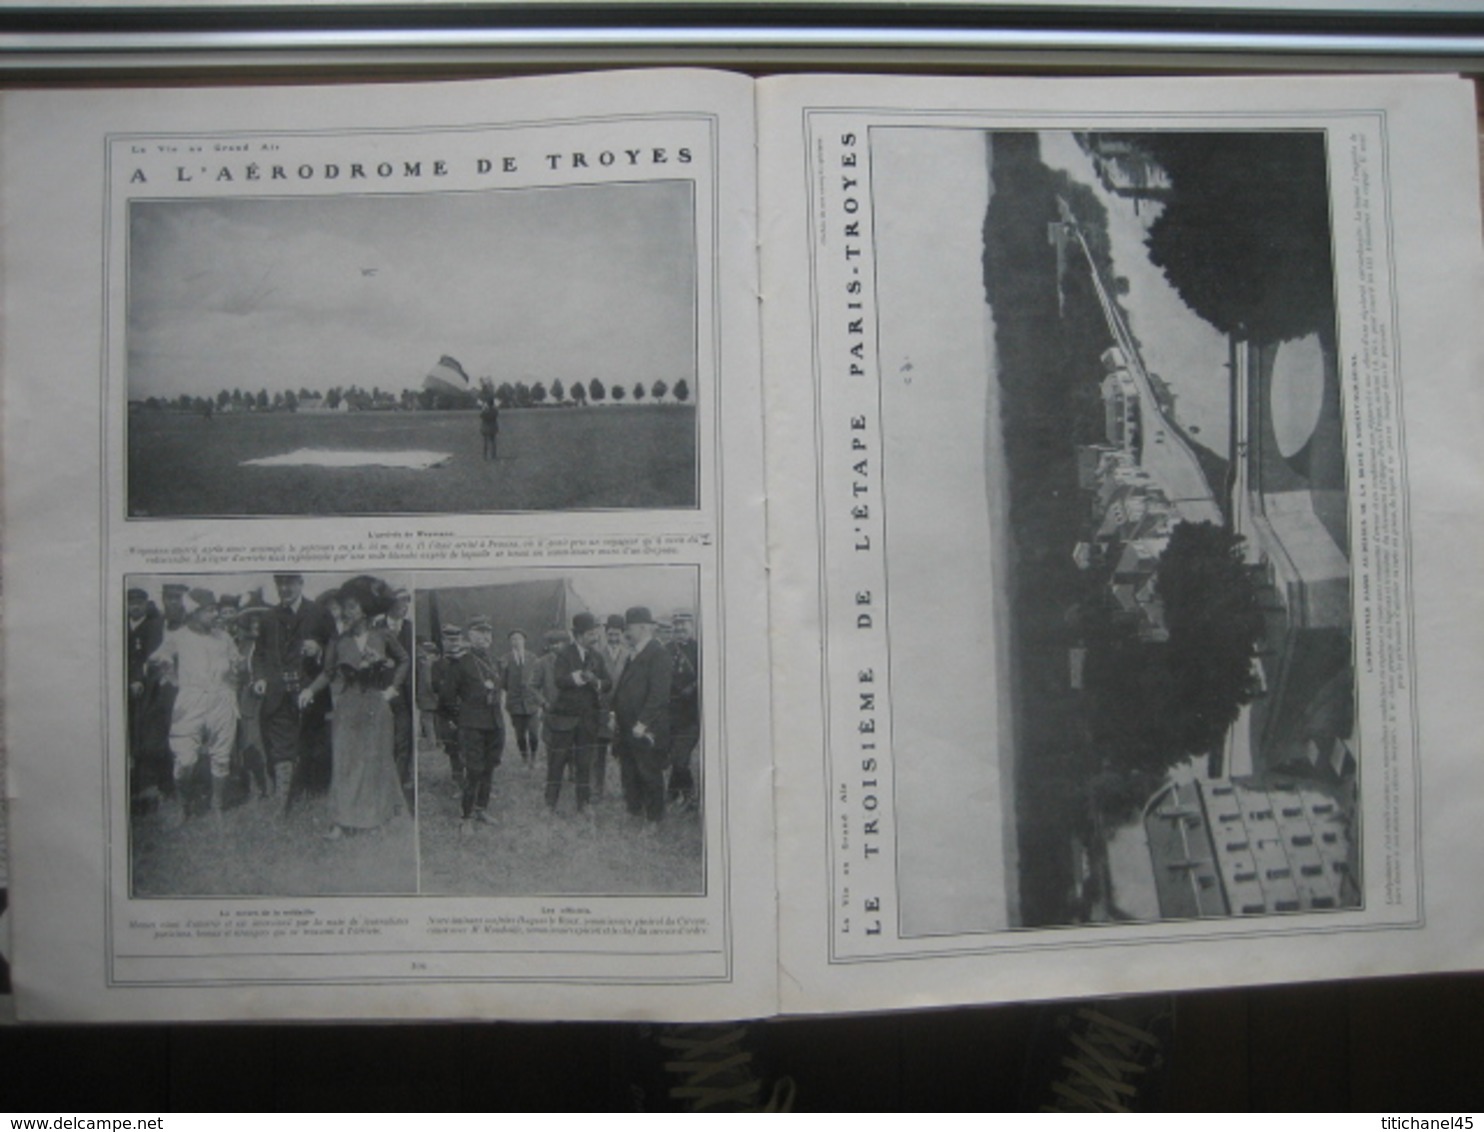 1910 AVIATION : CIRCUIT DE L'EST : TROYE-NANCY : LEBLANC-AUBRUN-LEGAGNEUX-LINDPAINTNER-BREGI-MAMET-WEYMAN-LATHAM